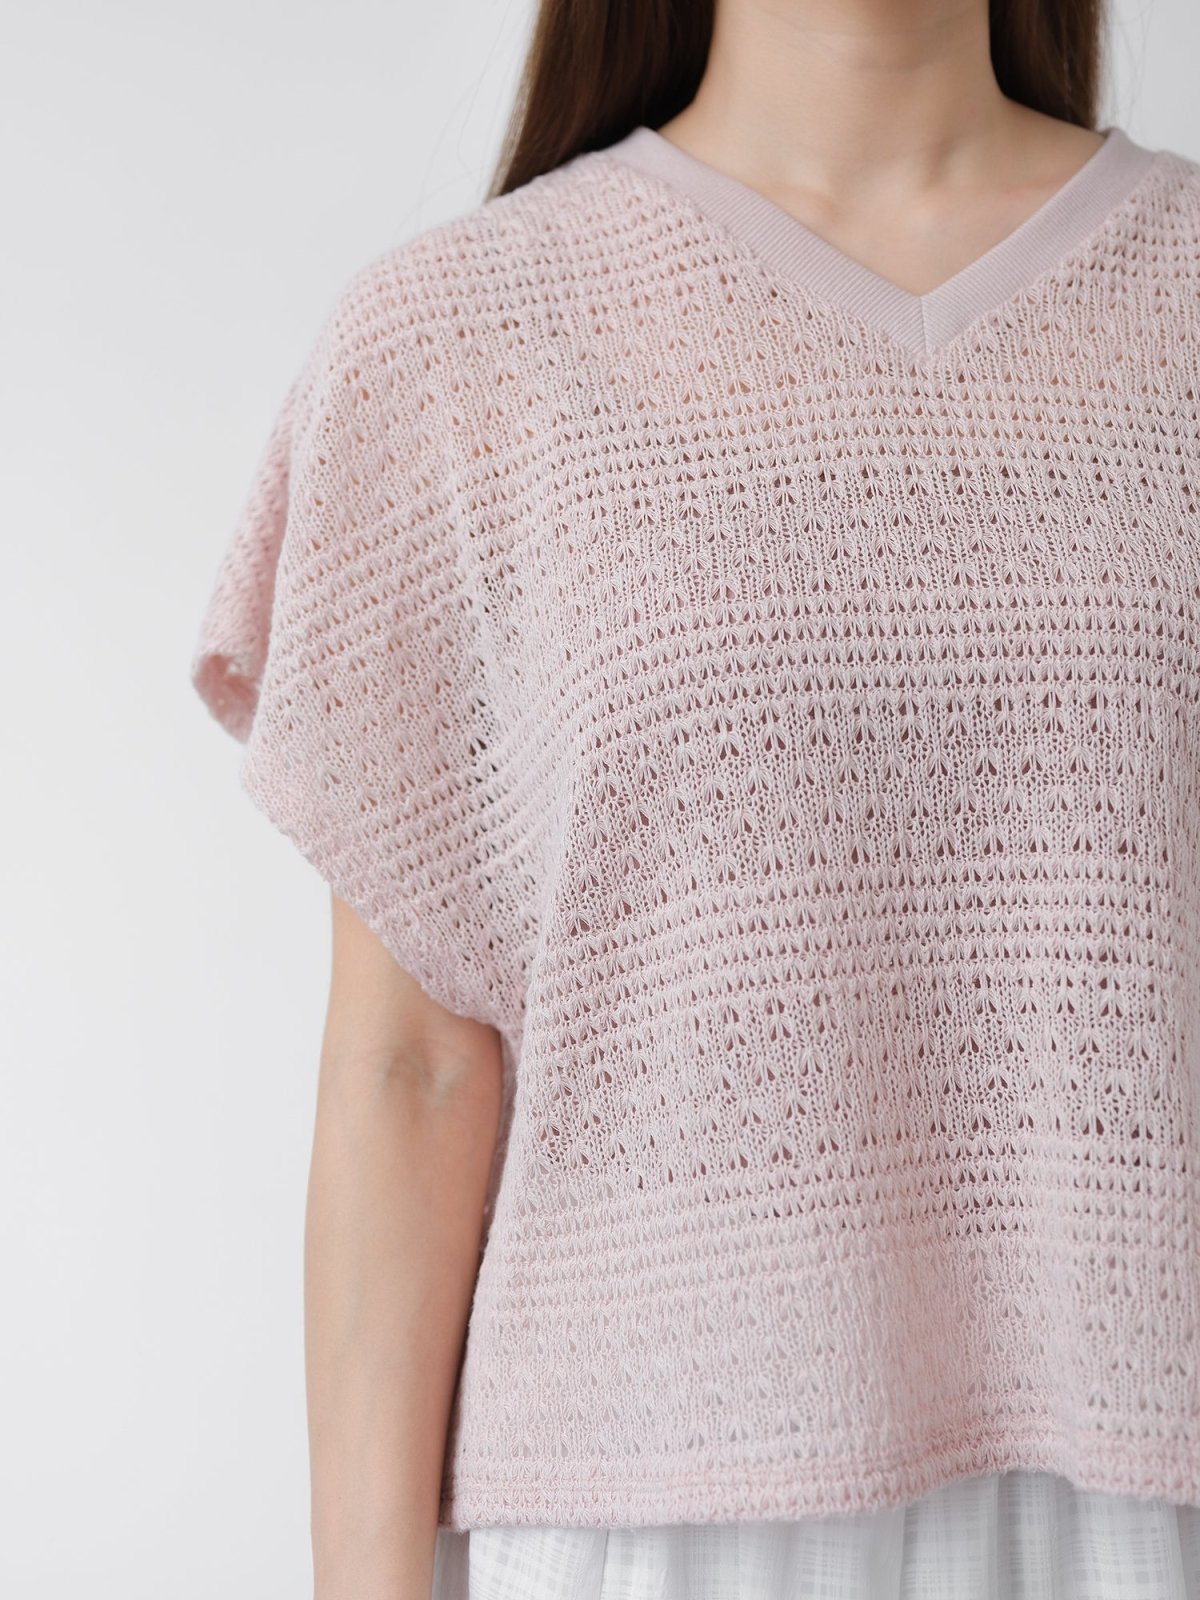 V-neck Crochet Top - DAG-DD1439-24SoftPinkF - Soft Pink - F - D'zage Designs